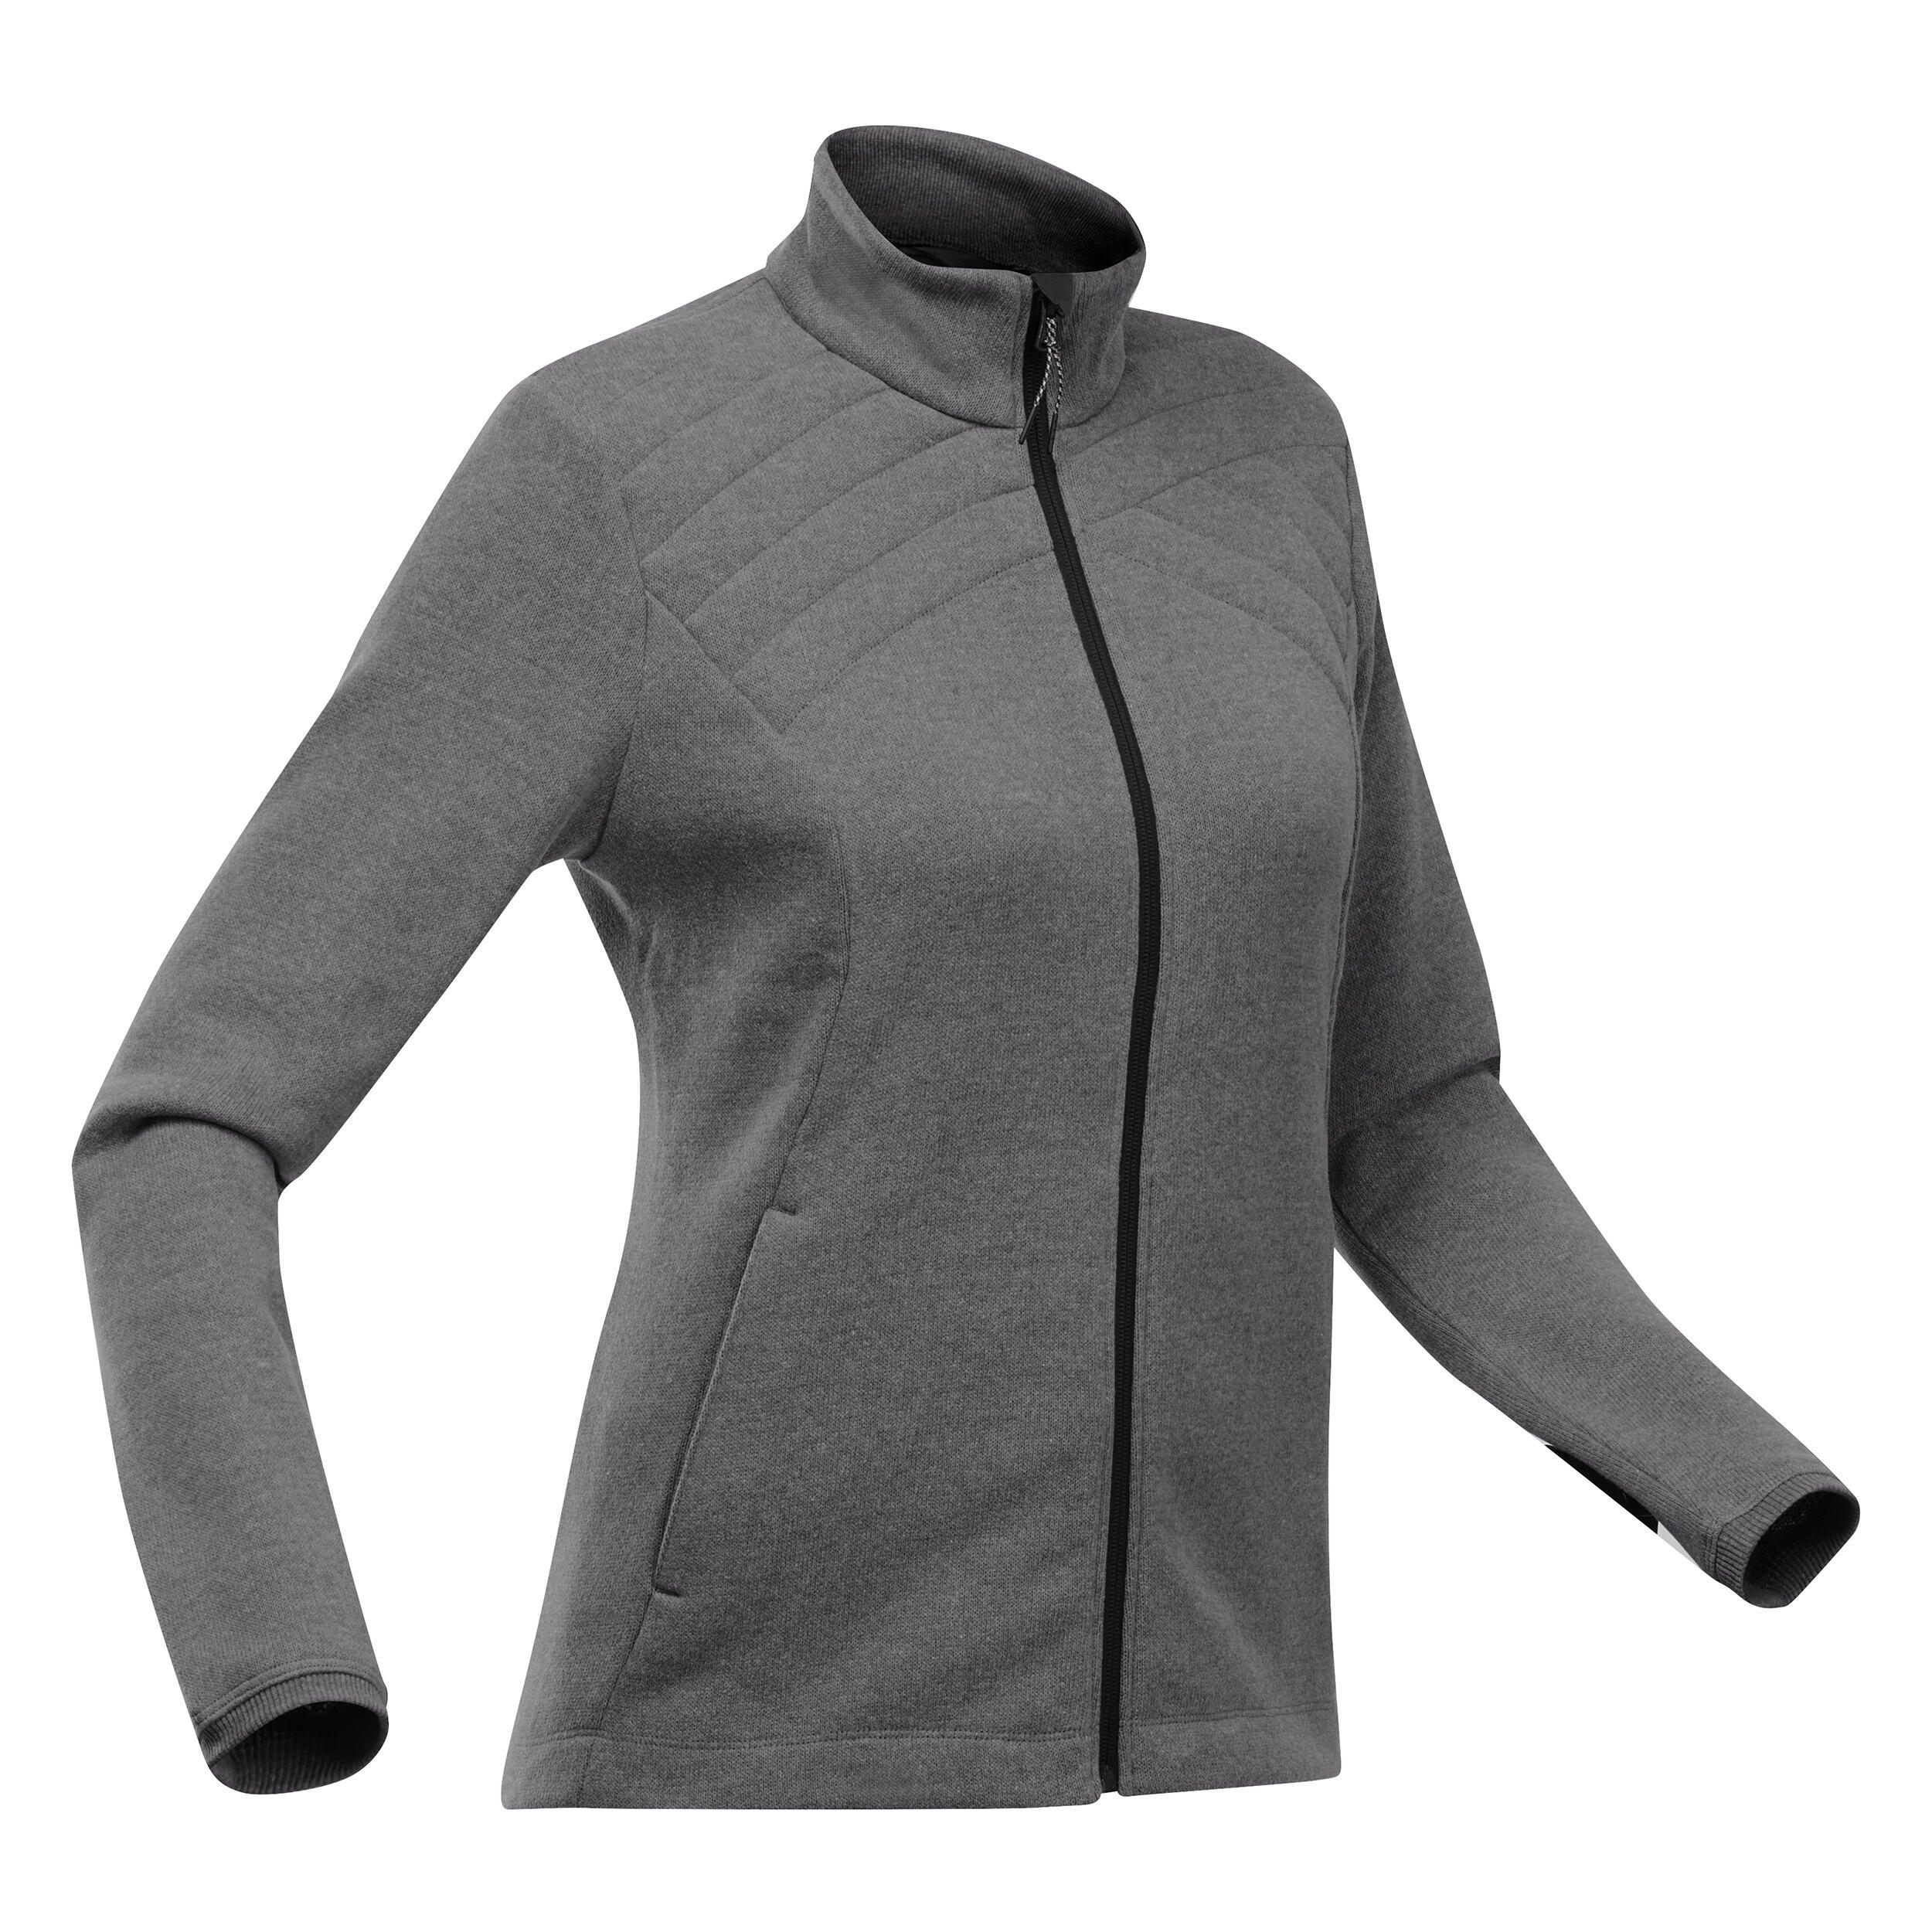 NH 100 Hiking Hybrid Sweatshirt - Women - black, Carbon grey